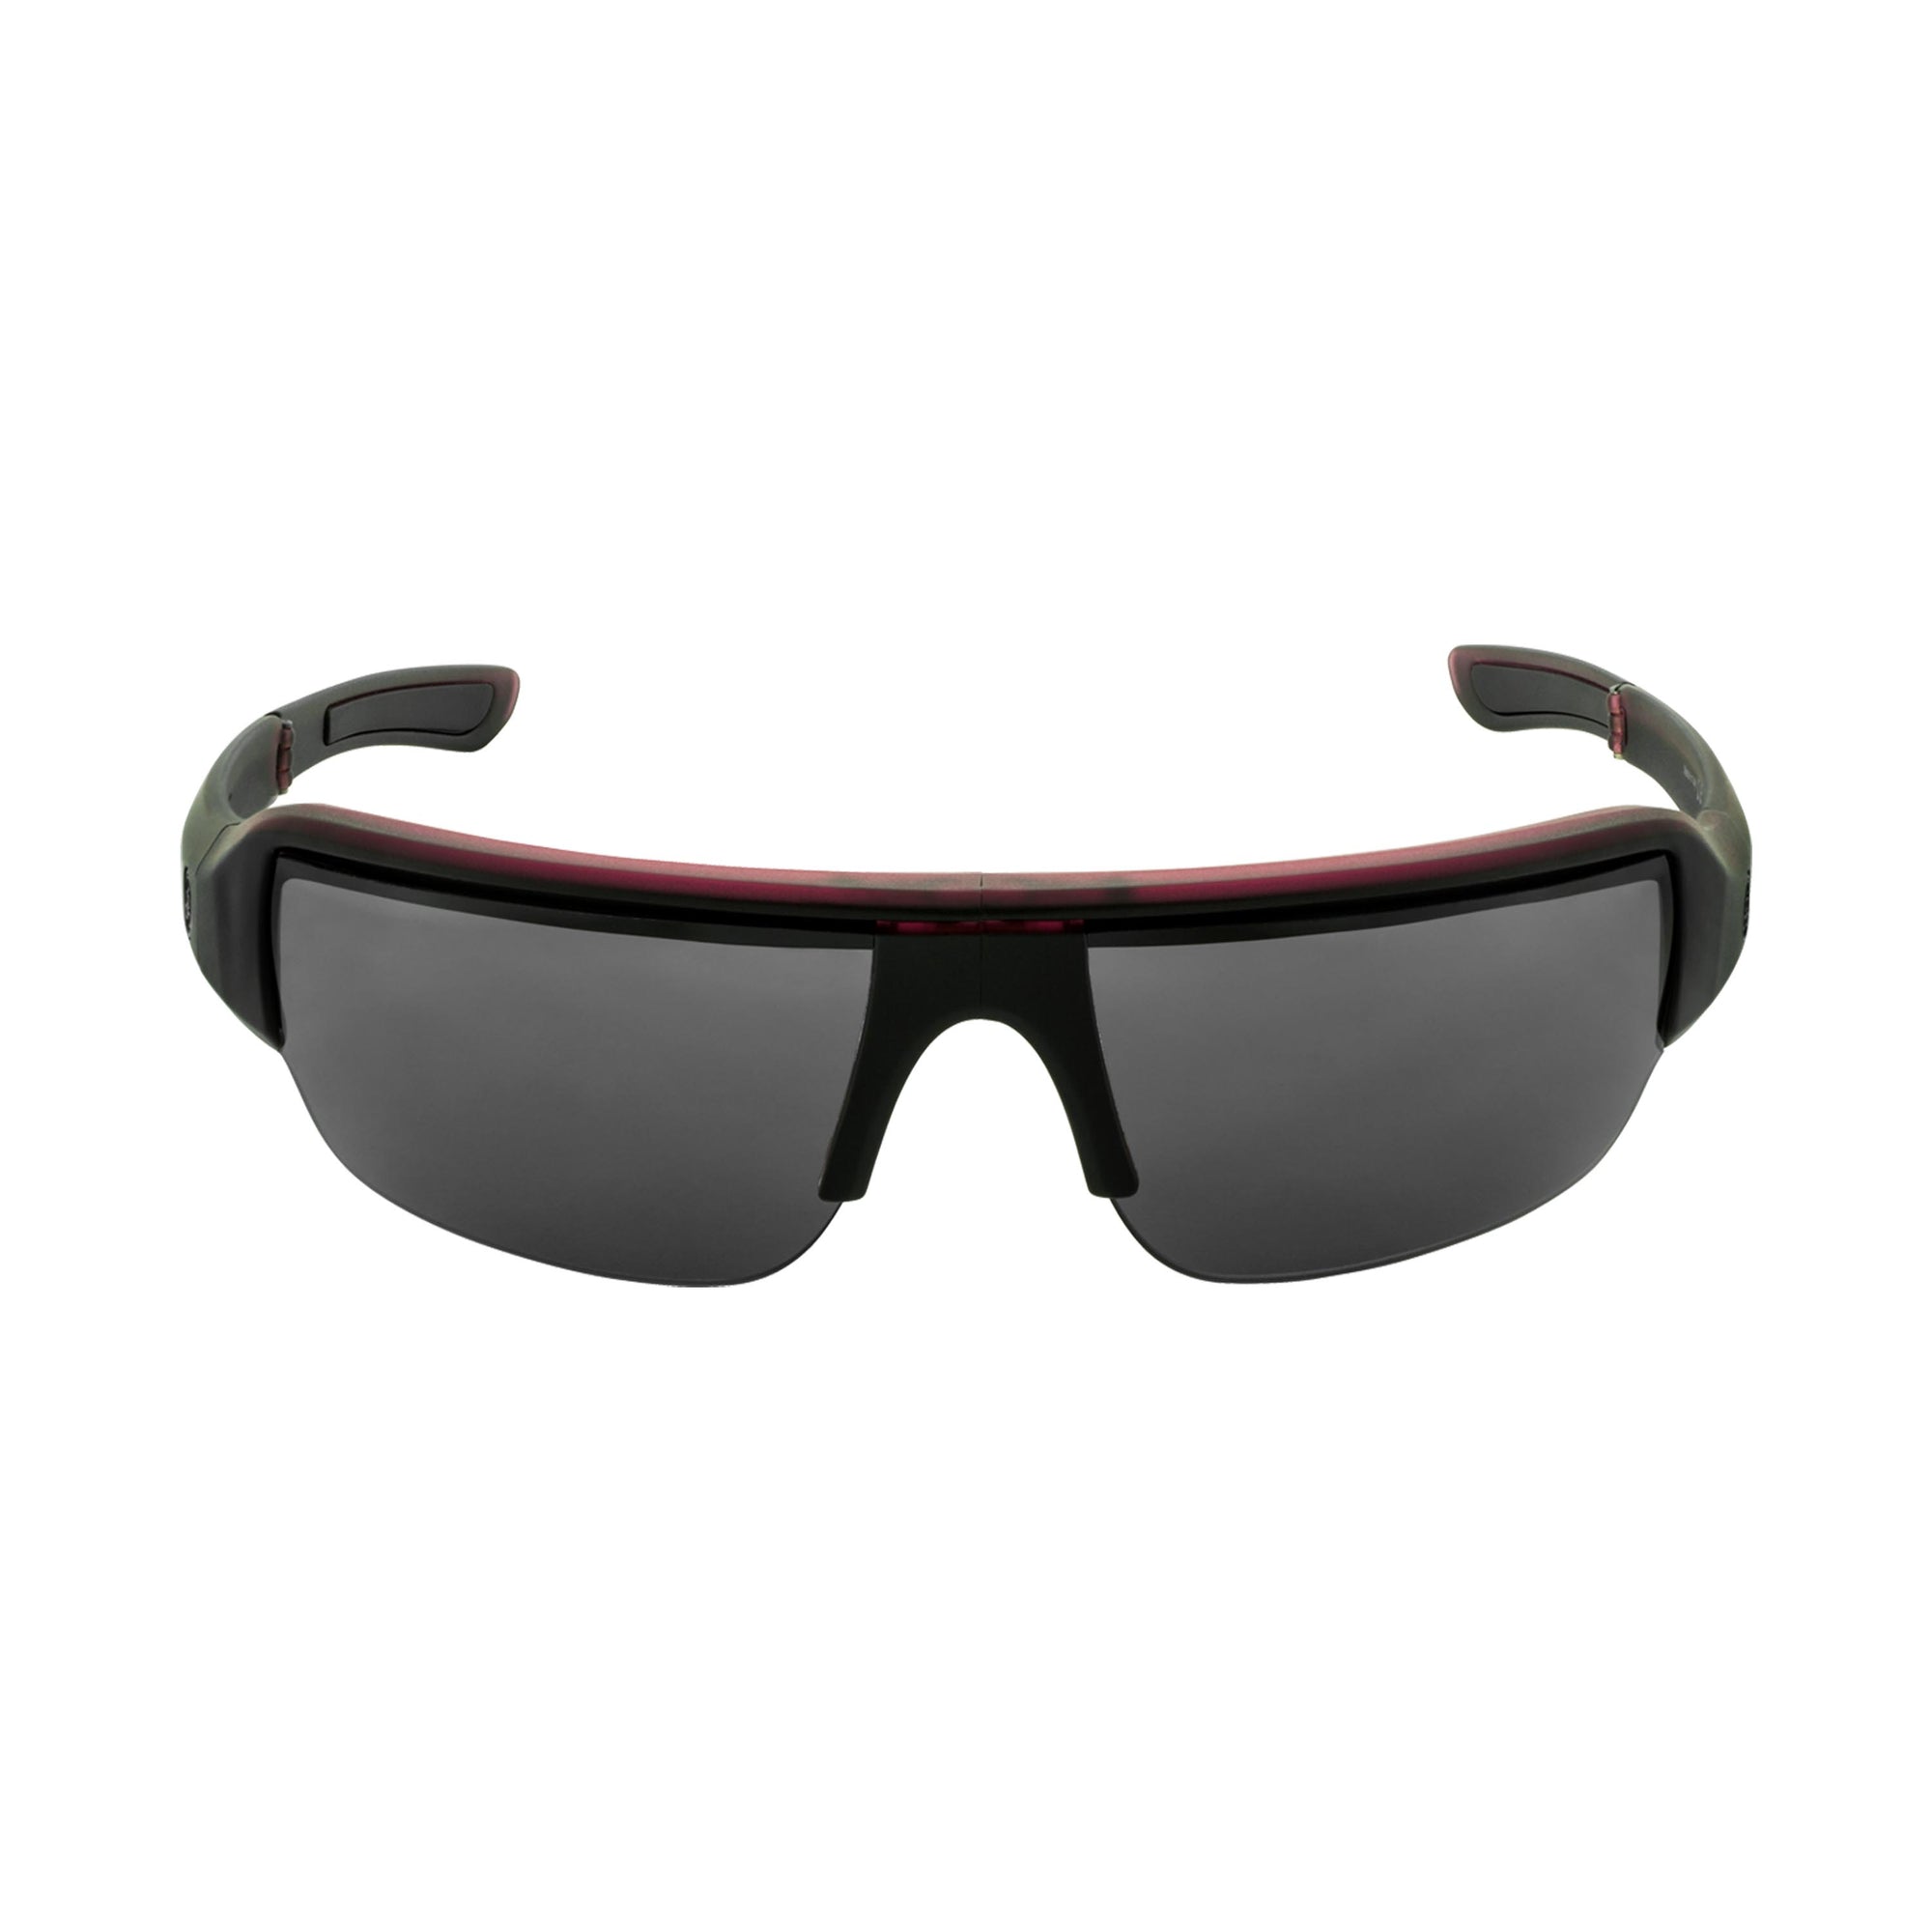 Popticals, Premium Compact Sunglasses, PopGun, 030010-LFGP, Polarized Sunglasses, Gloss Wine/Black Crystal Frame, Gray Lenses, Glam View